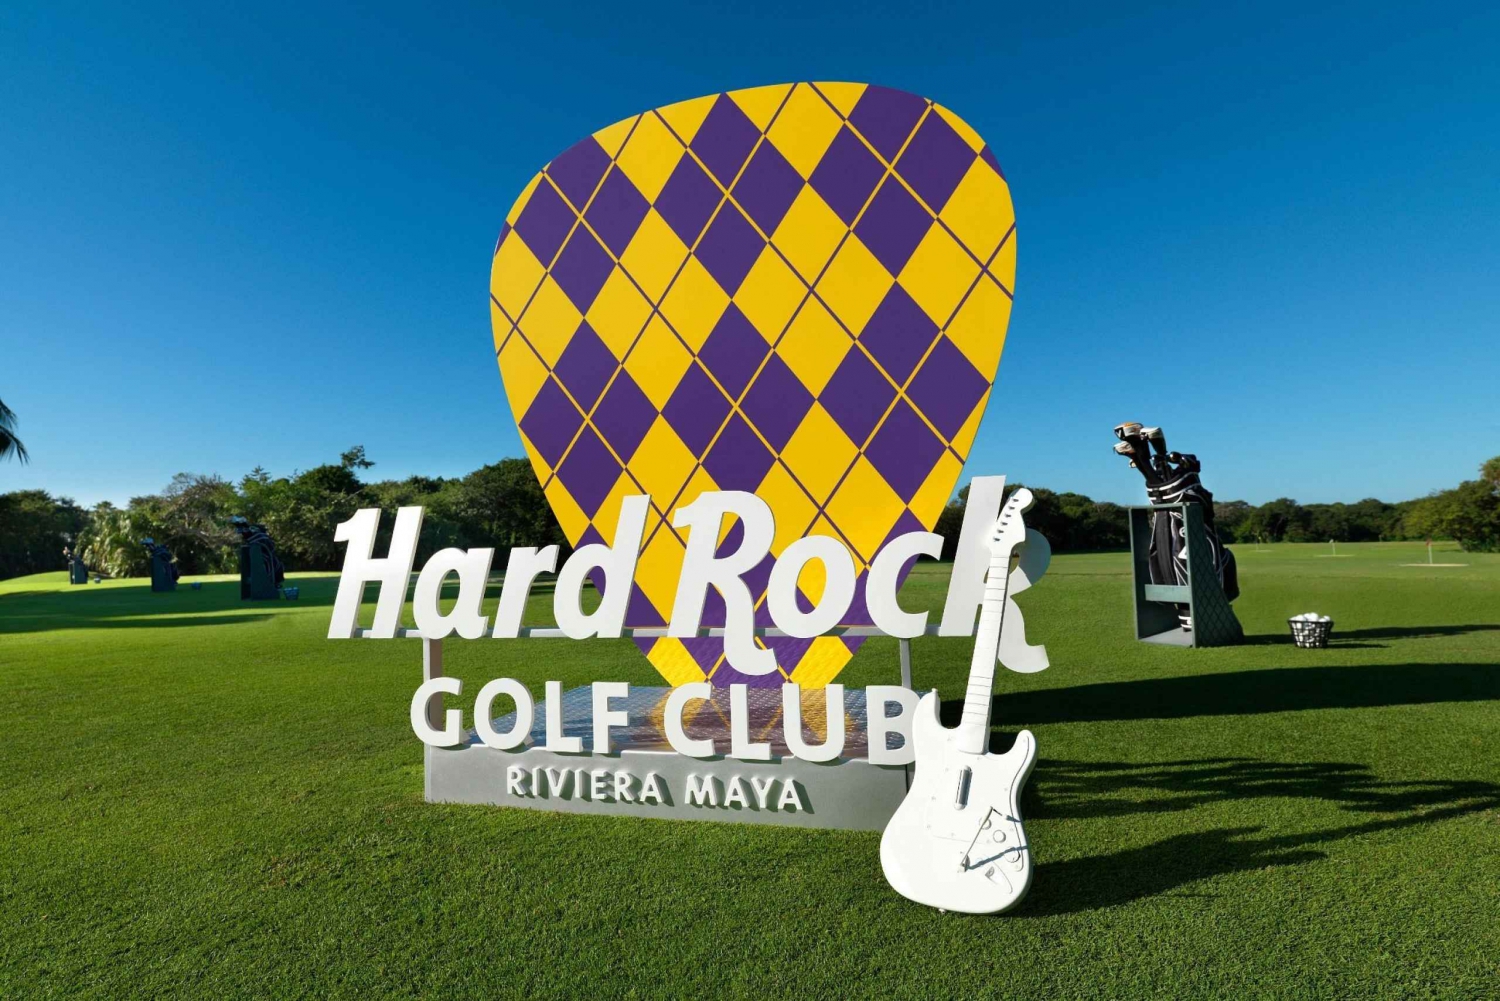 Club de golf Hard Rock